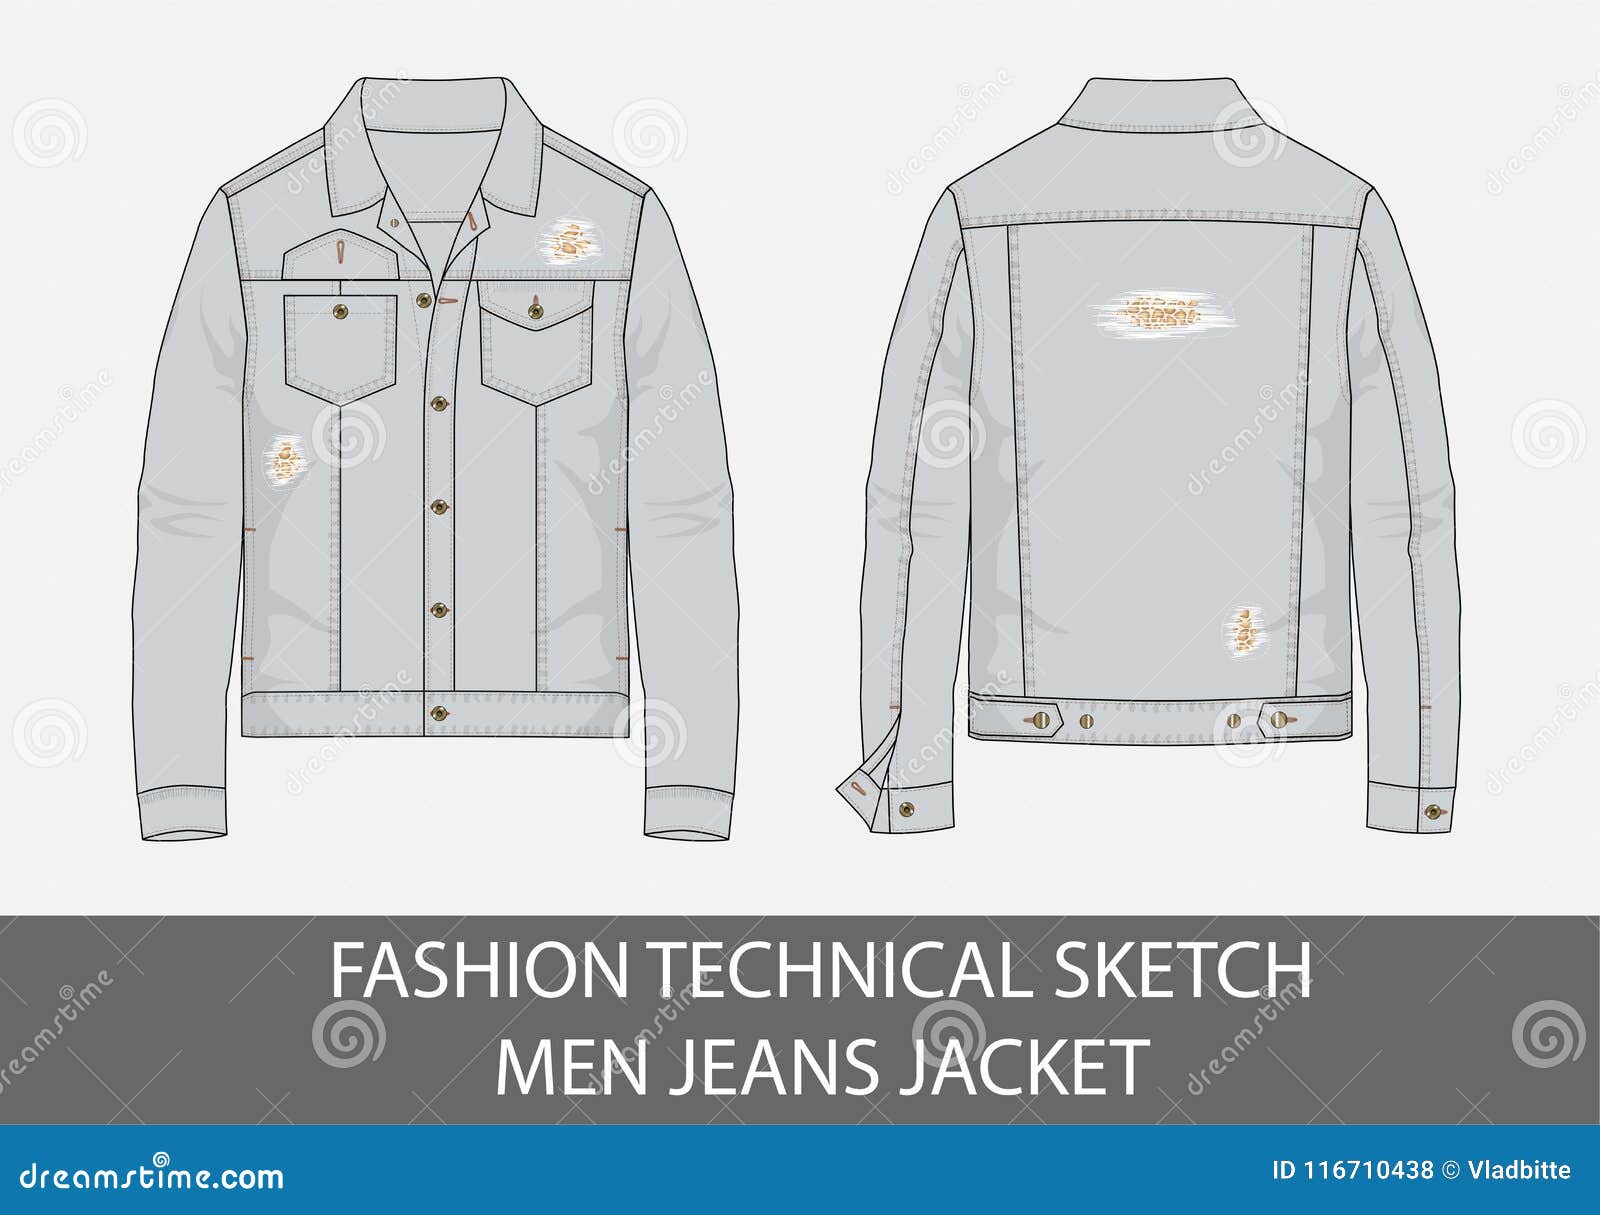 fashion technical sketch men jeans jacket